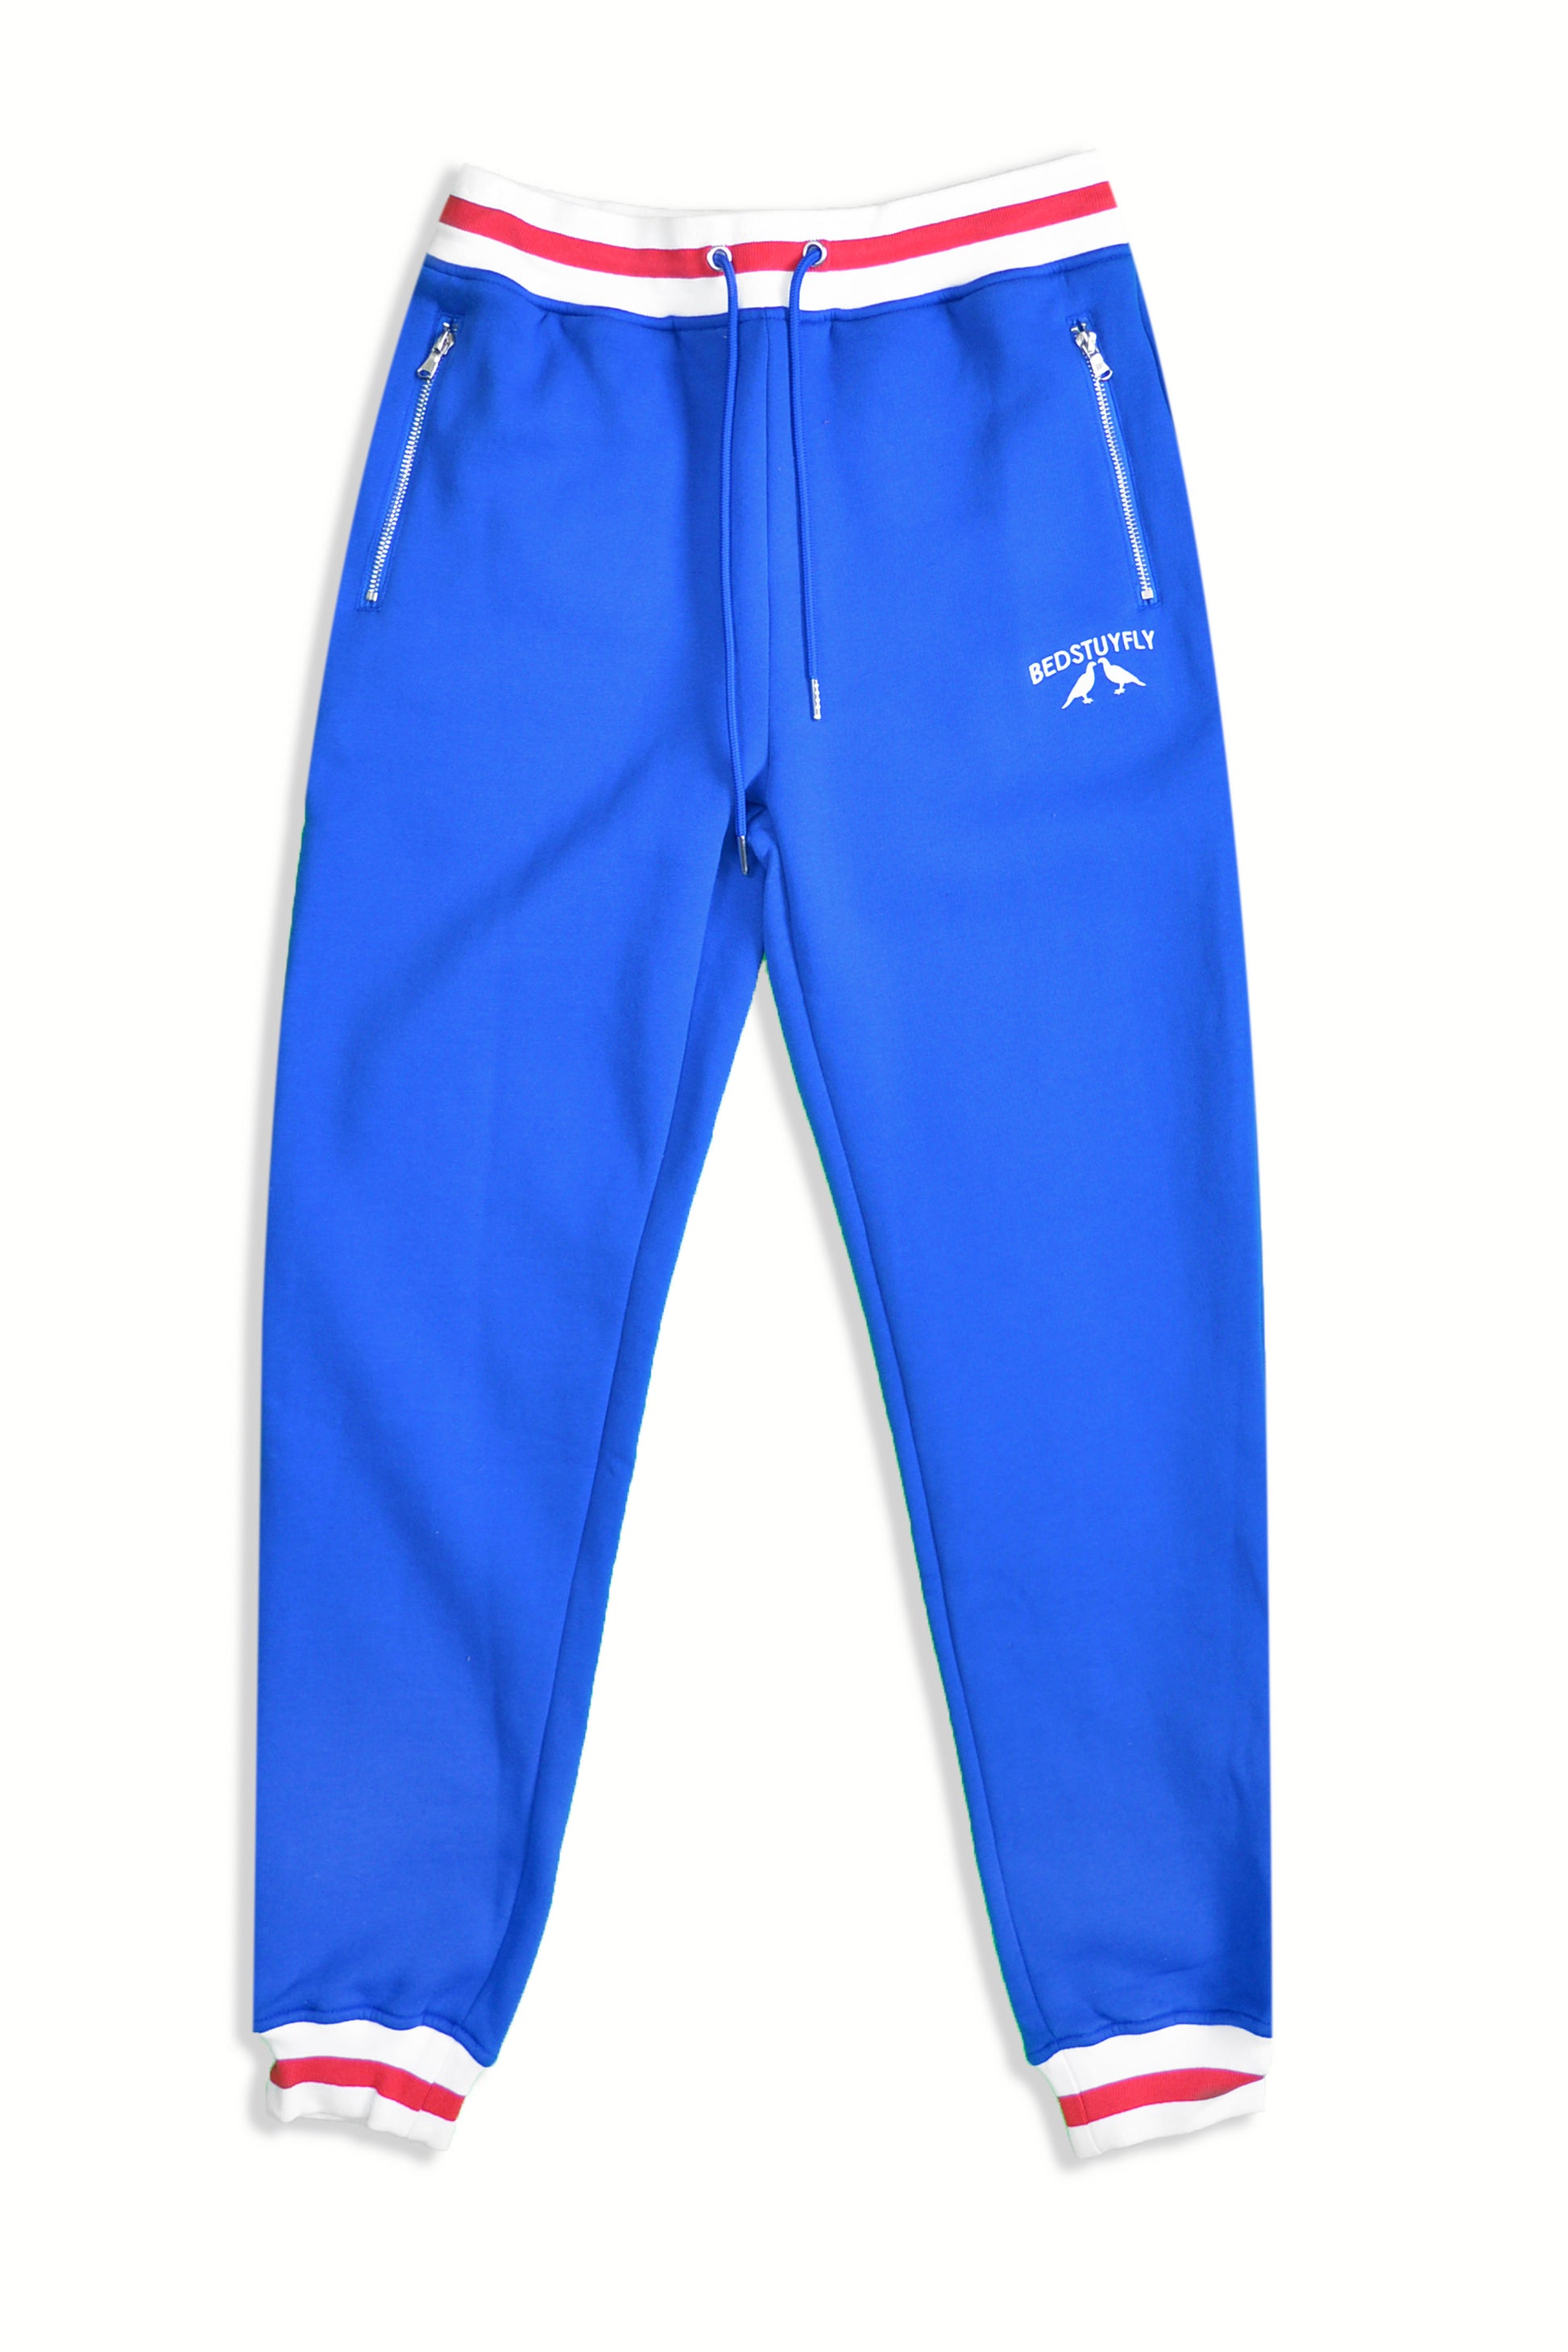 Vanderbilt Sweatpants (Royal Blue) - Bedstuyfly